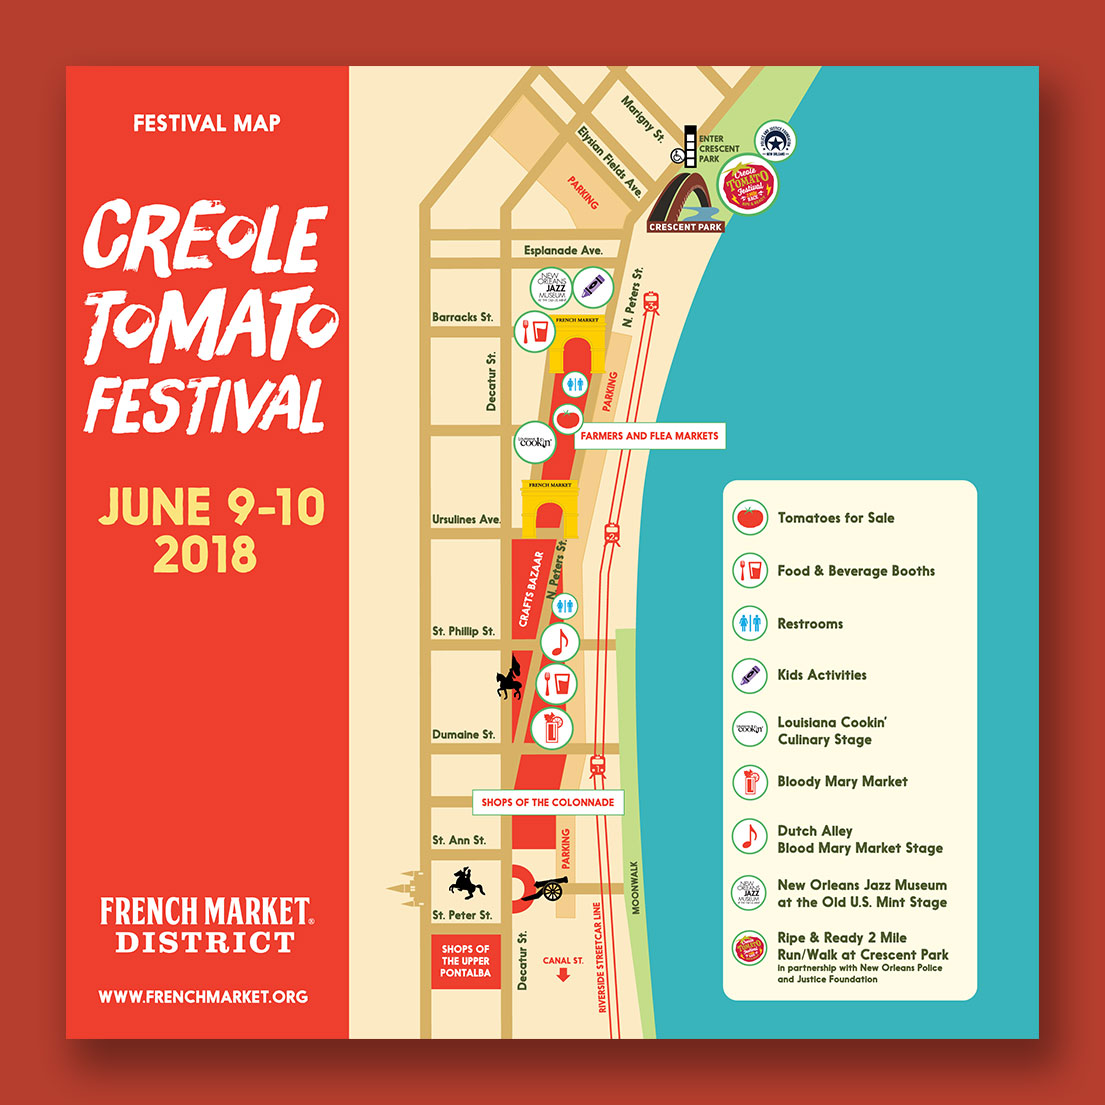 Creole Tomato Festival Map